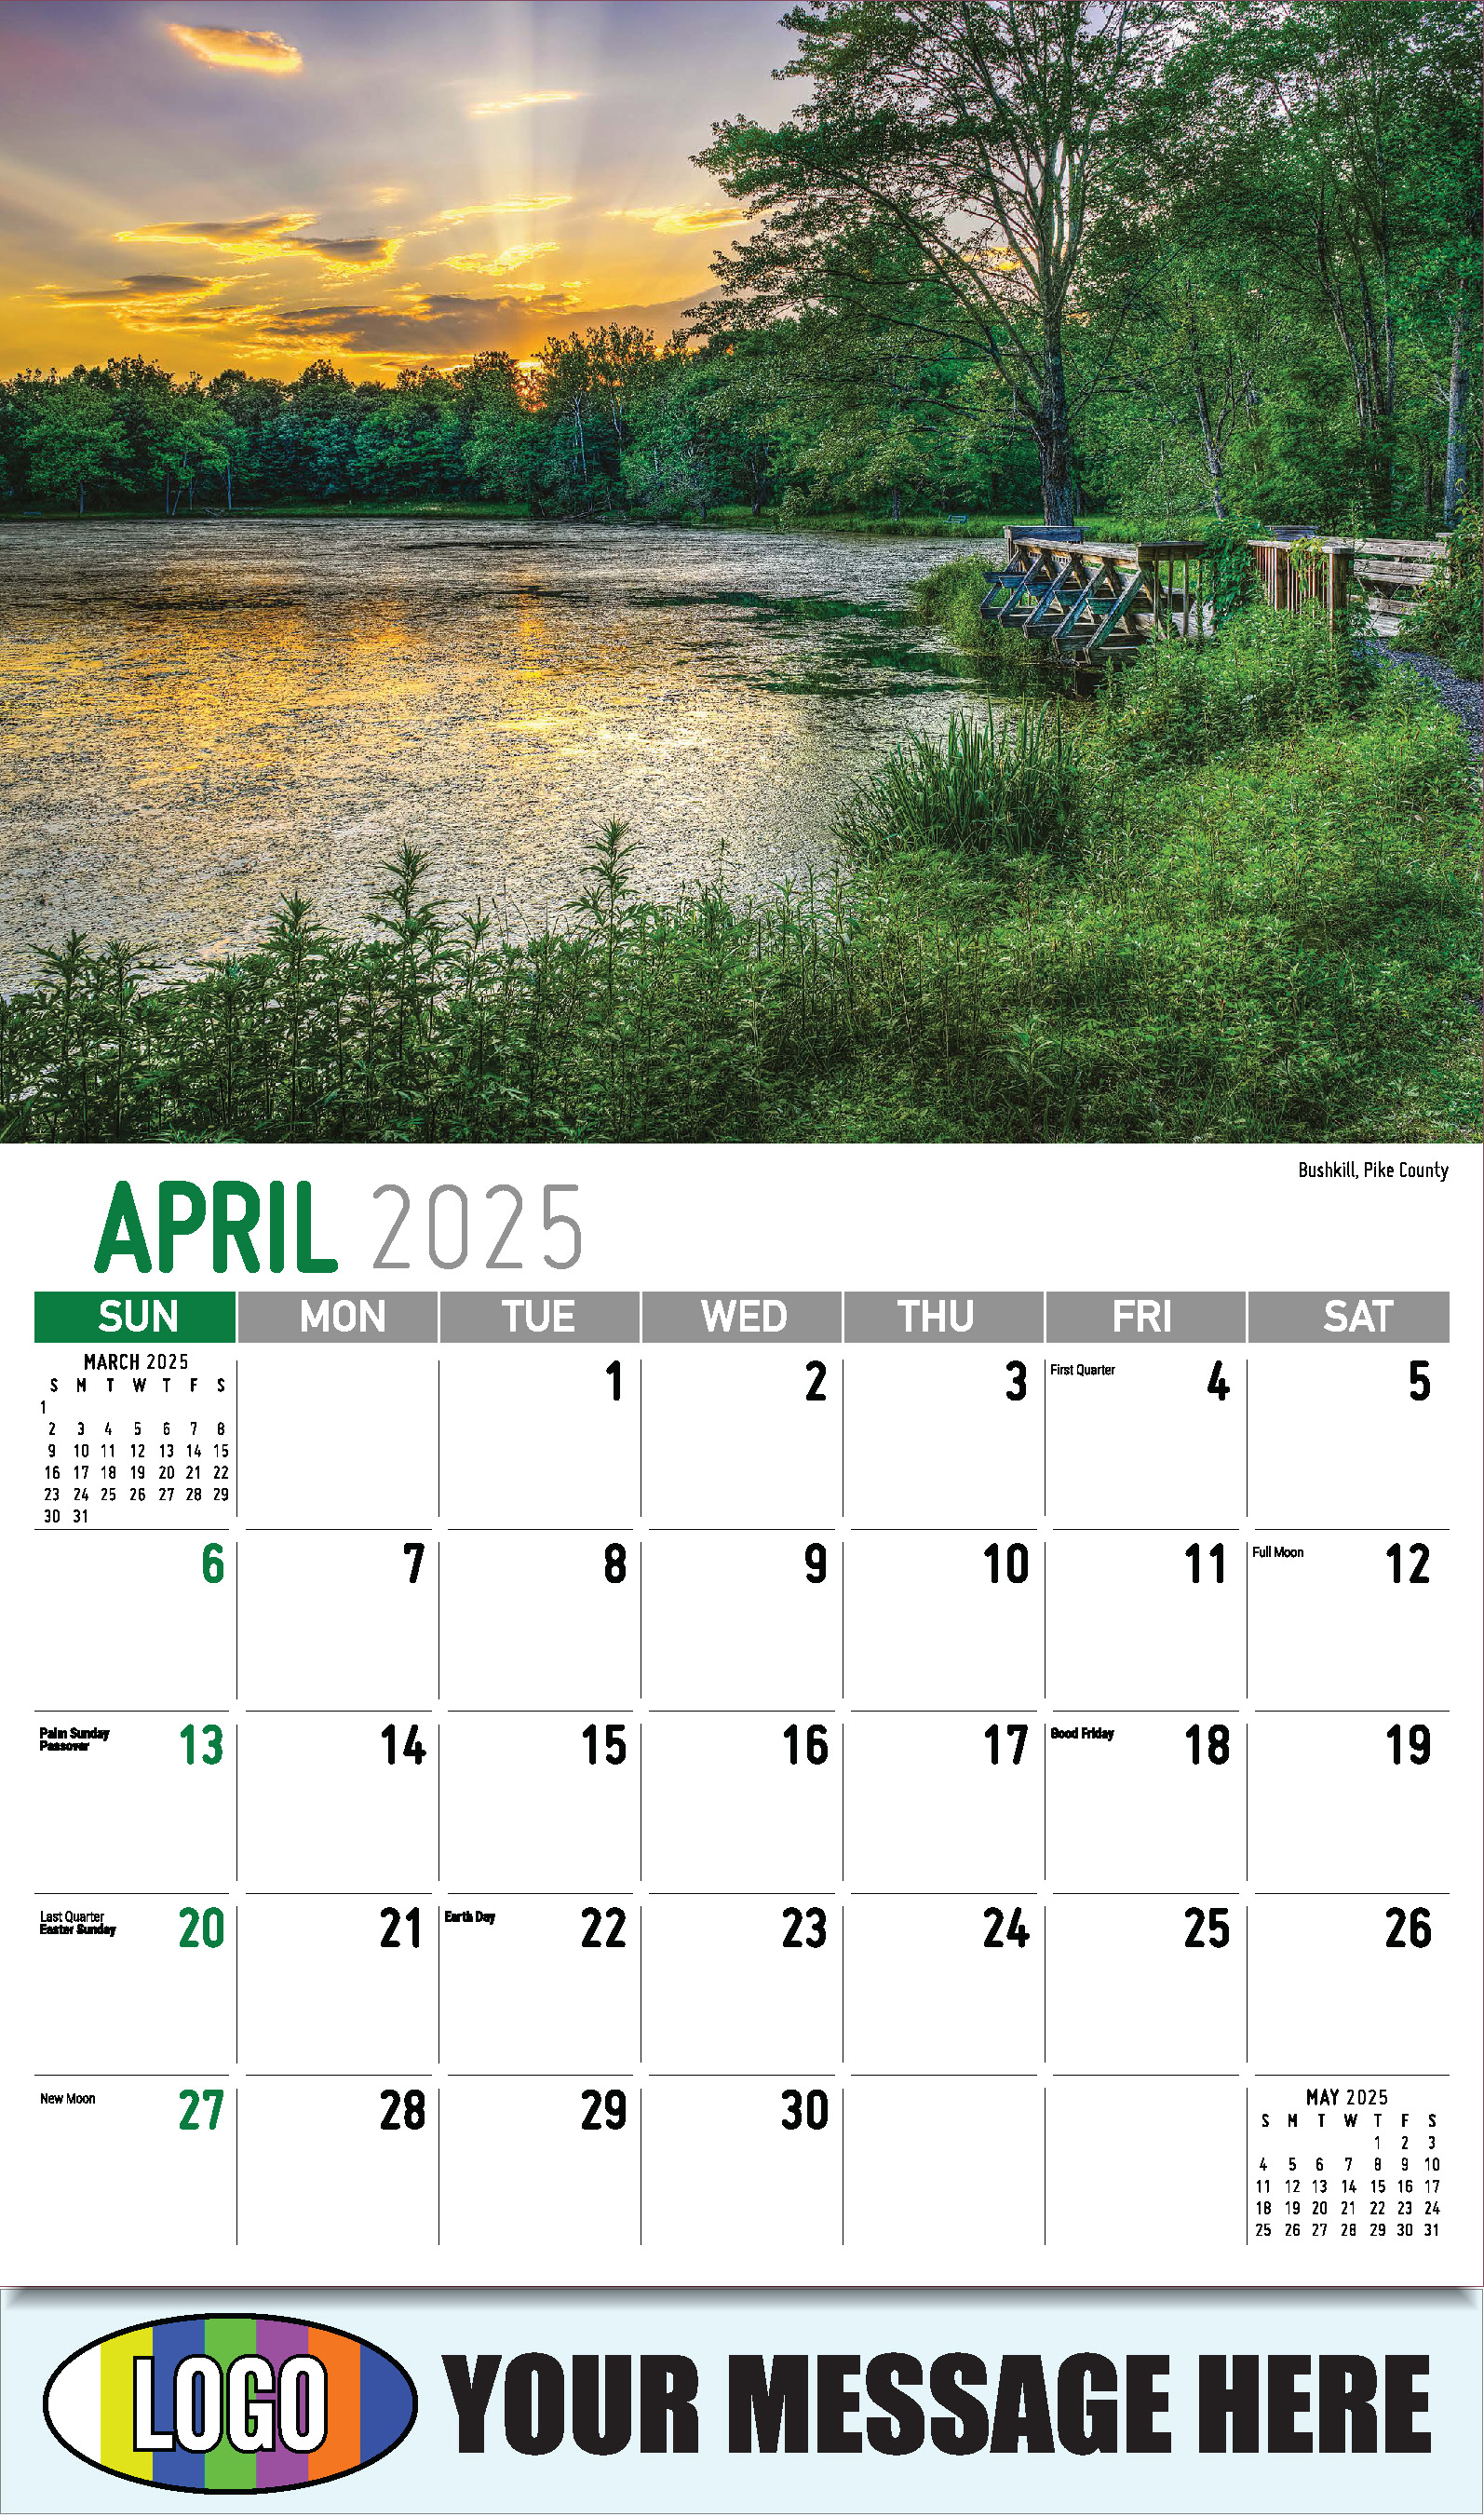 Scenes of Pennsylvania 2025 Business Promotion Calendar - April